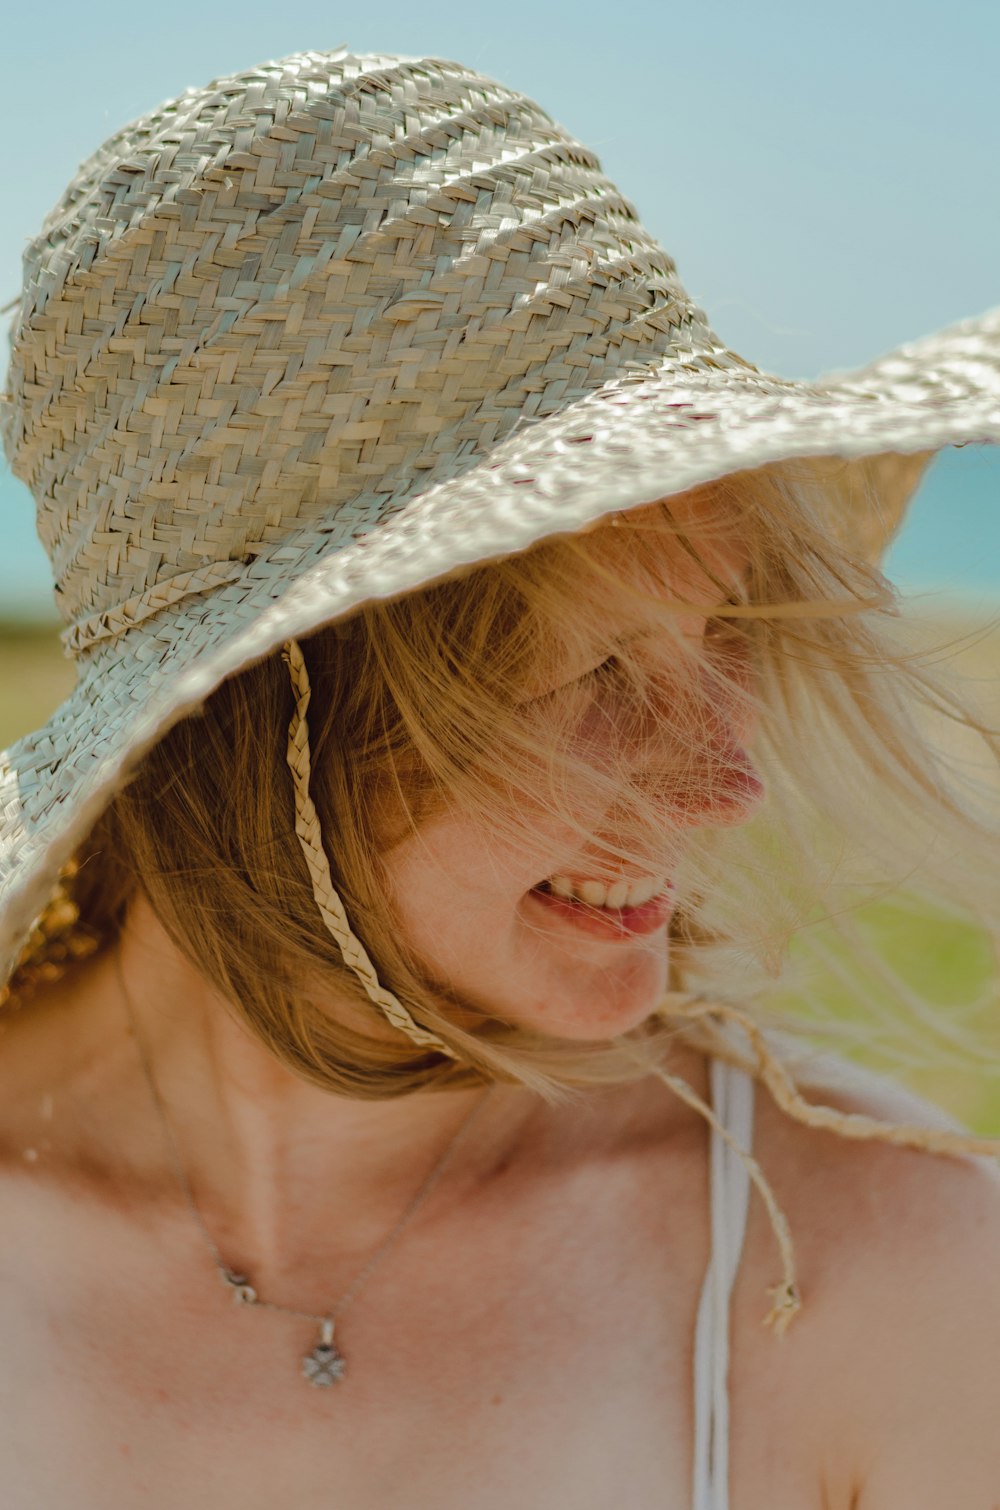 smiling woman wearing gray sun hat